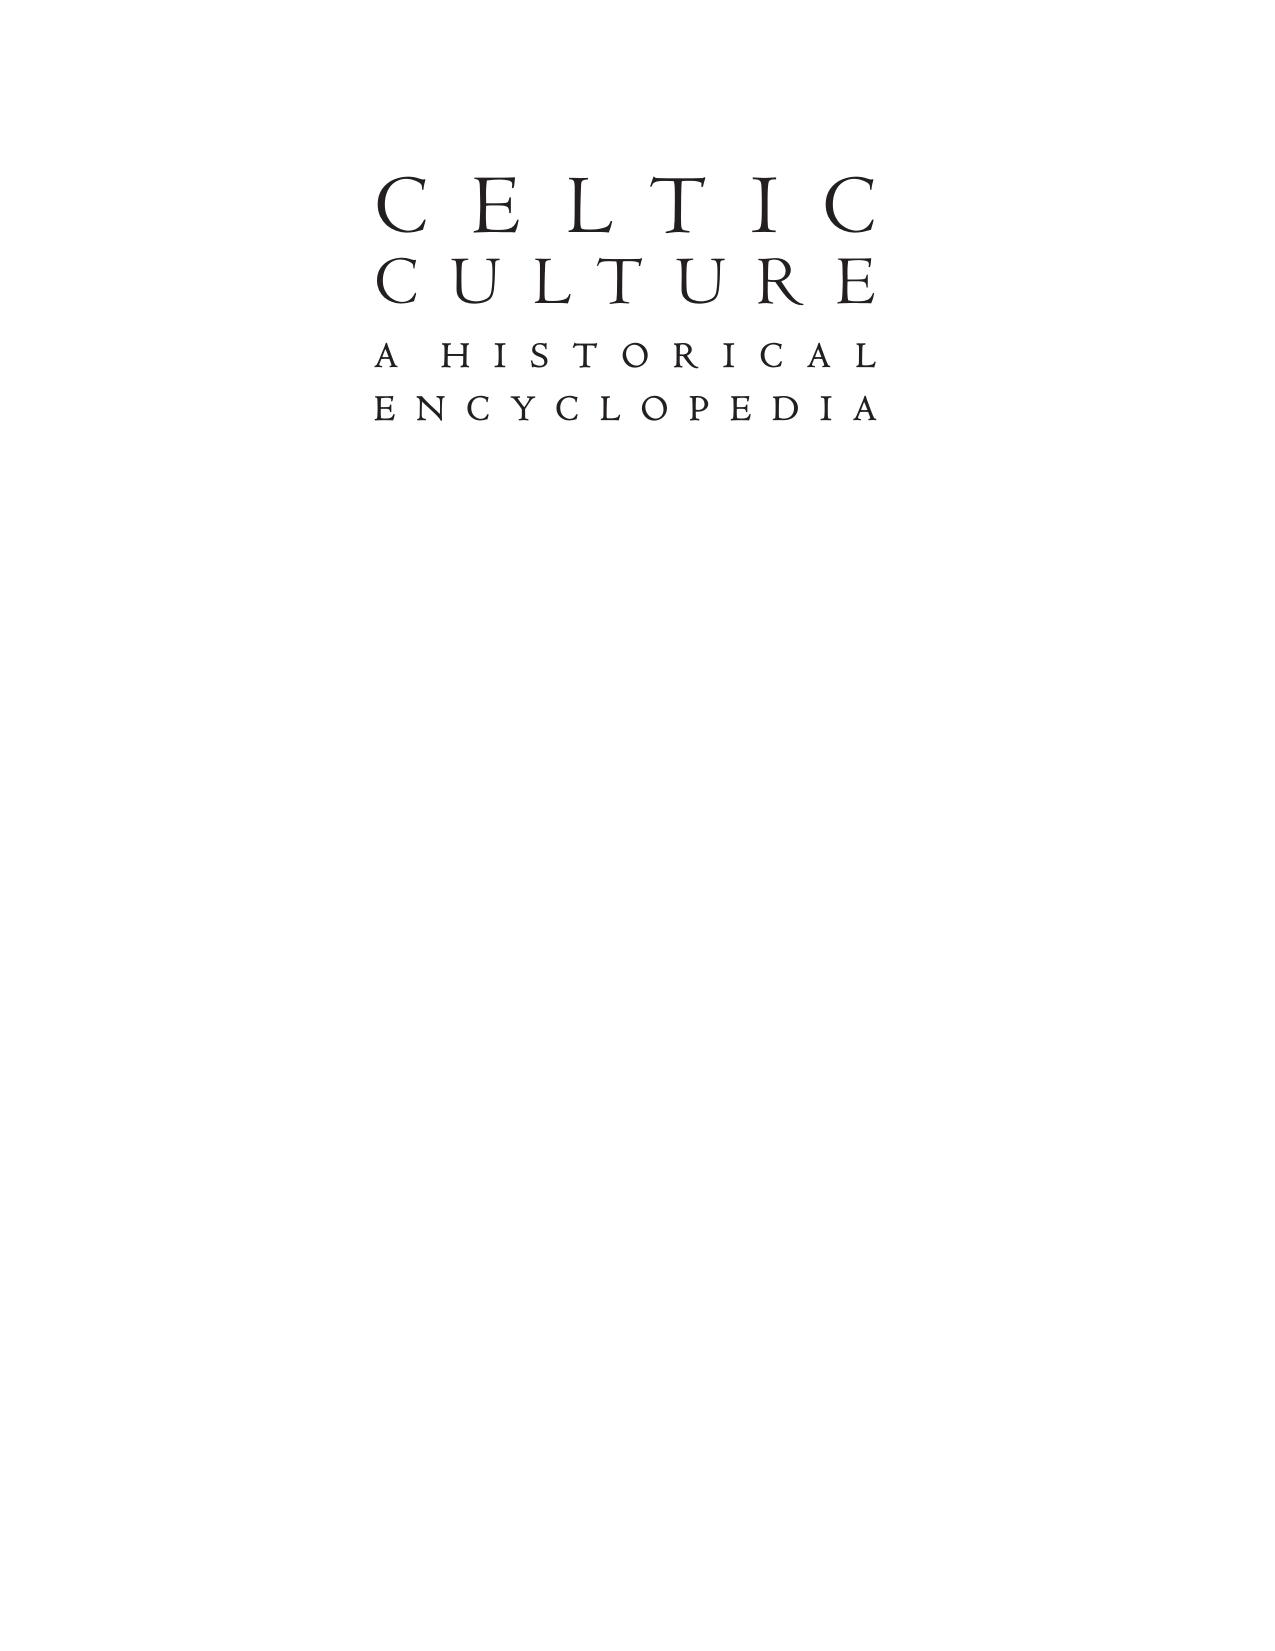 Celtic Culture: A Historical Encyclopedia - Volume 1 - A-Celti